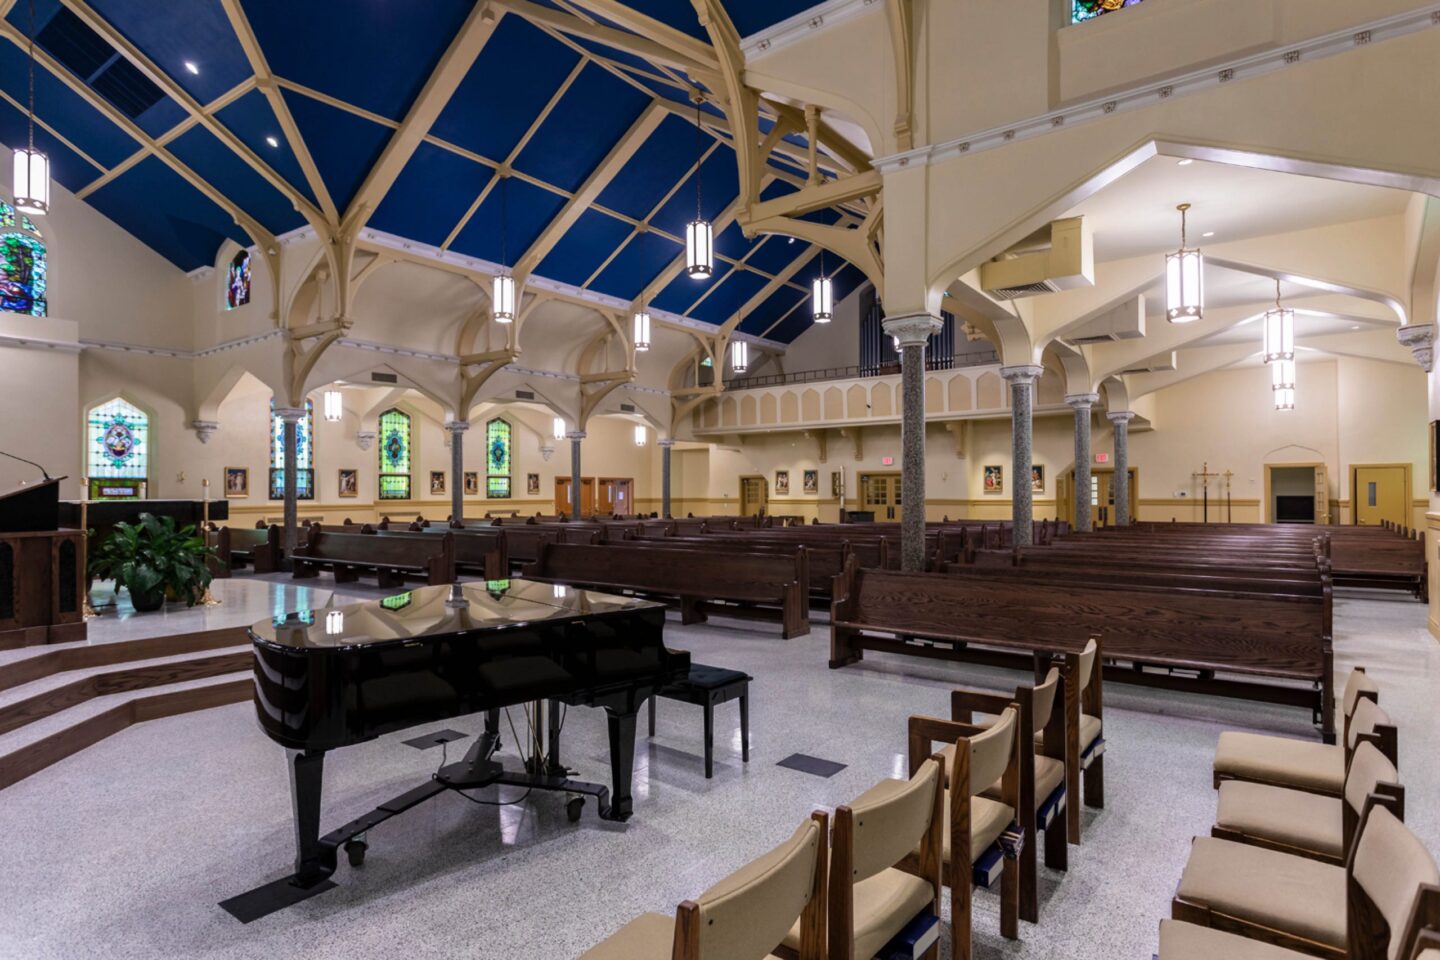 St. Paul the Apostle Catholic Church Choir Area designed by Bray Architects